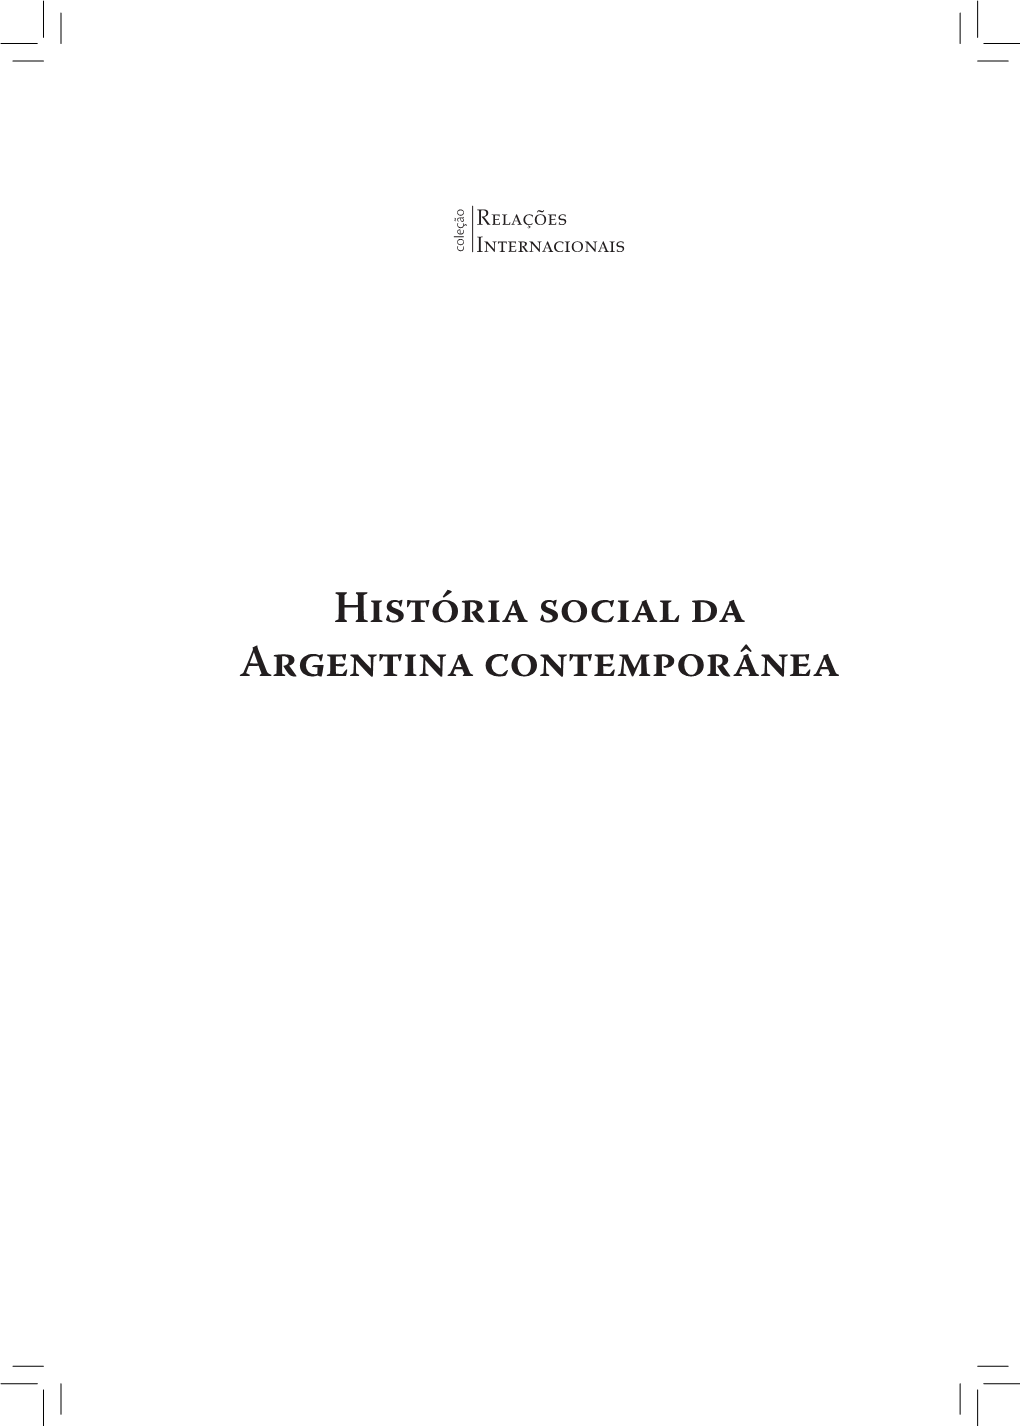 HISTORIA SOCIAL DA ARGENTINA 08 05 V.9.Indd